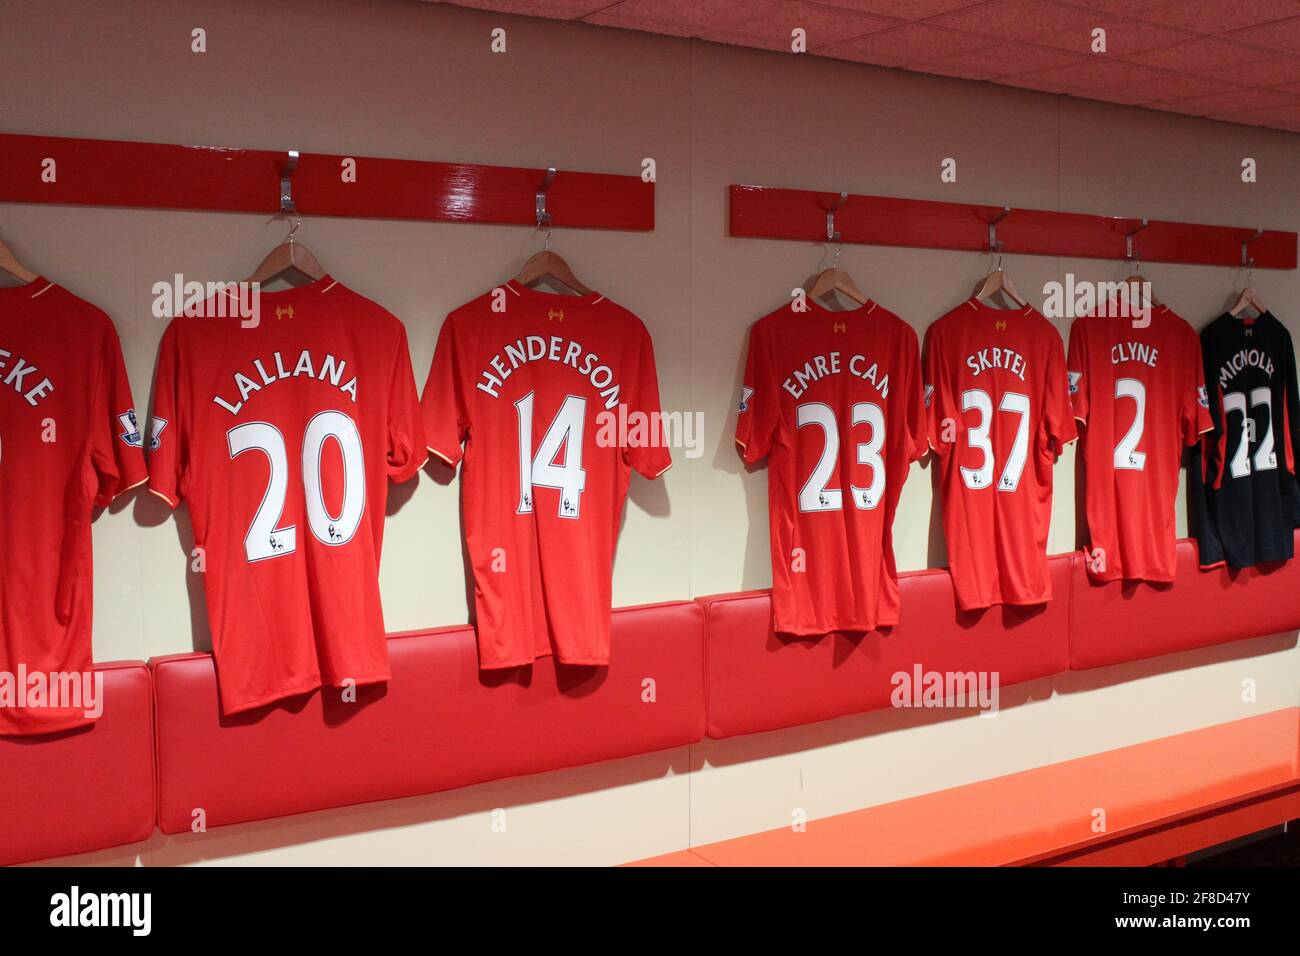 ENGLAND, LIVERPOOL, ANFIELD STADIUM, SEPTEMBER 28, 2015; LFC jerseys on hangers inside the Anfield stadium in Liverpool Stock Photo